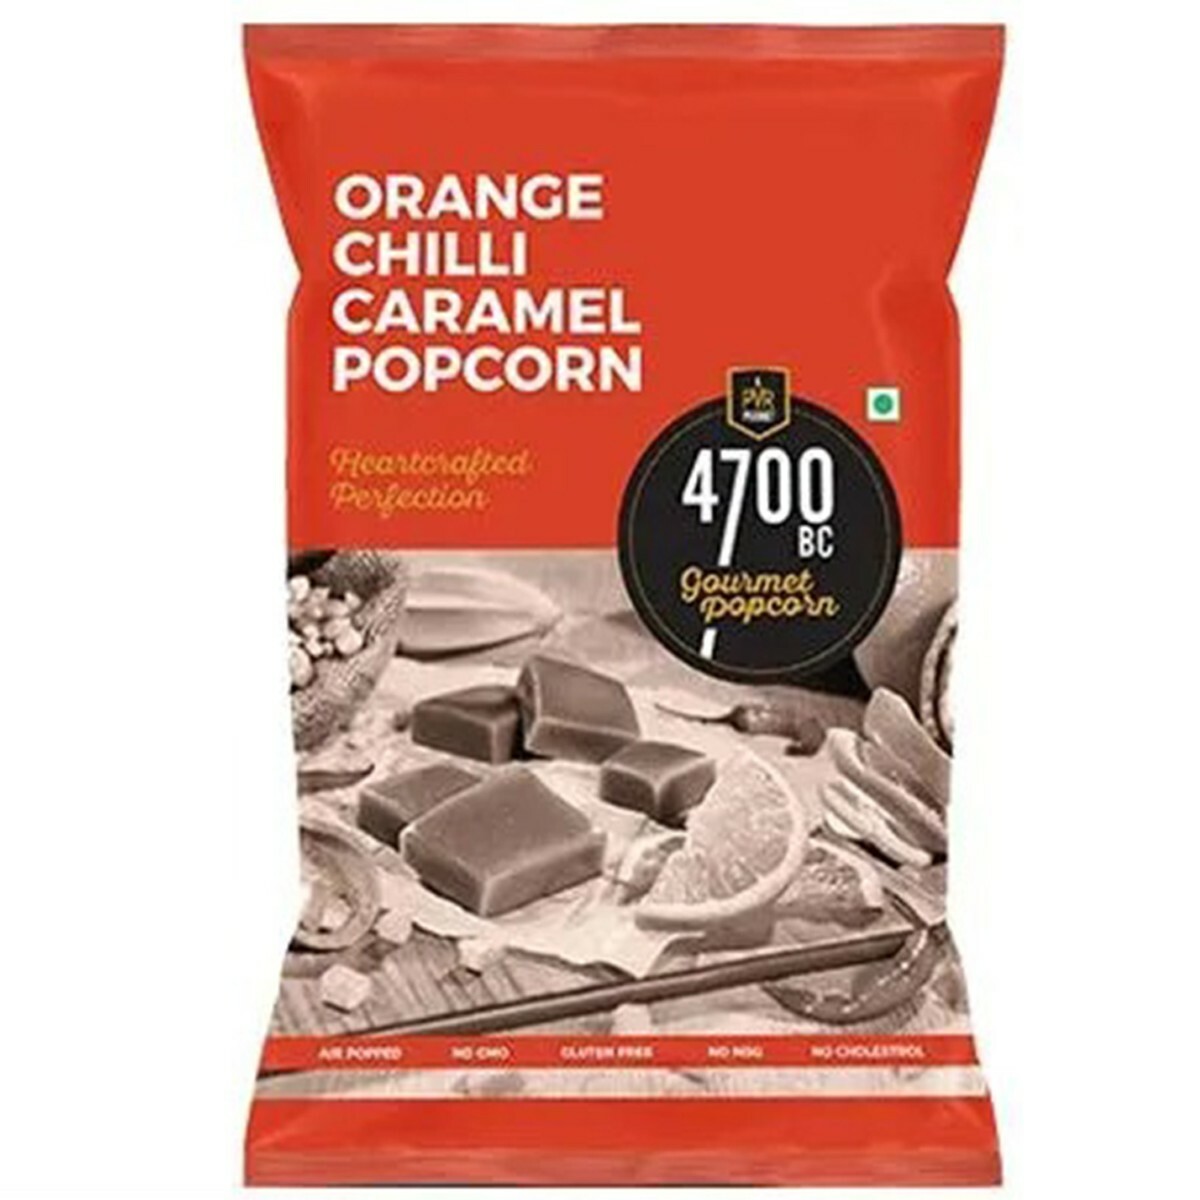 4700BC Orange Chili Caramel Popcorn 60g